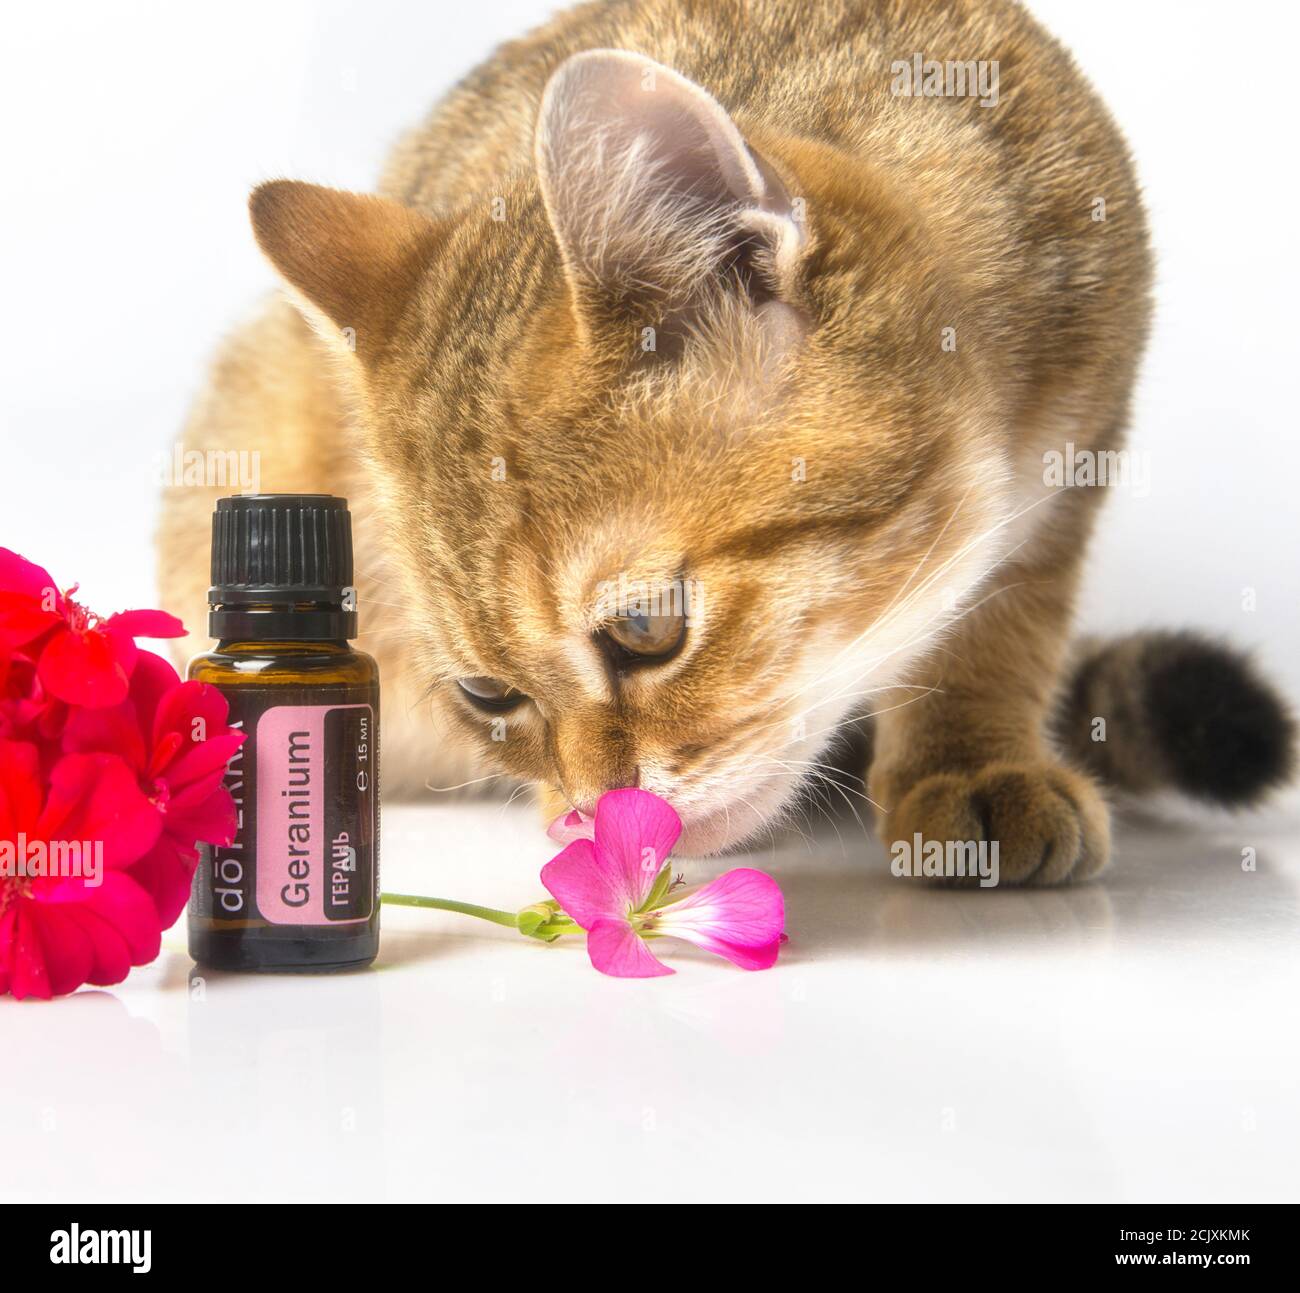 doTerra essential oil bottles. Geranium essential oil. Essential doterra oil. The red cat sniffing a flower of geranium. Stock Photo